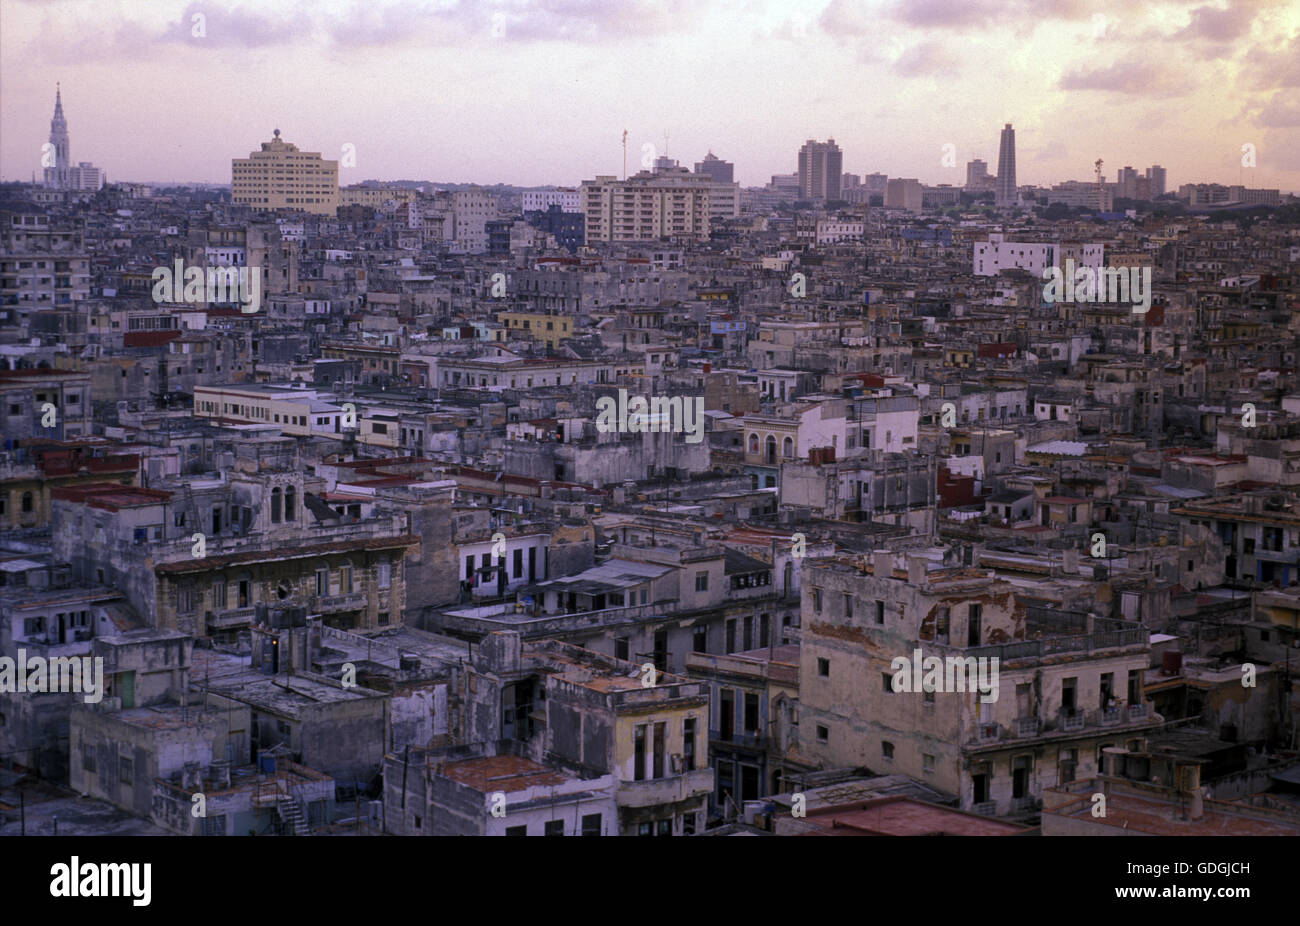 the city of Havana on Cuba in the caribbean sea. Stock Photo